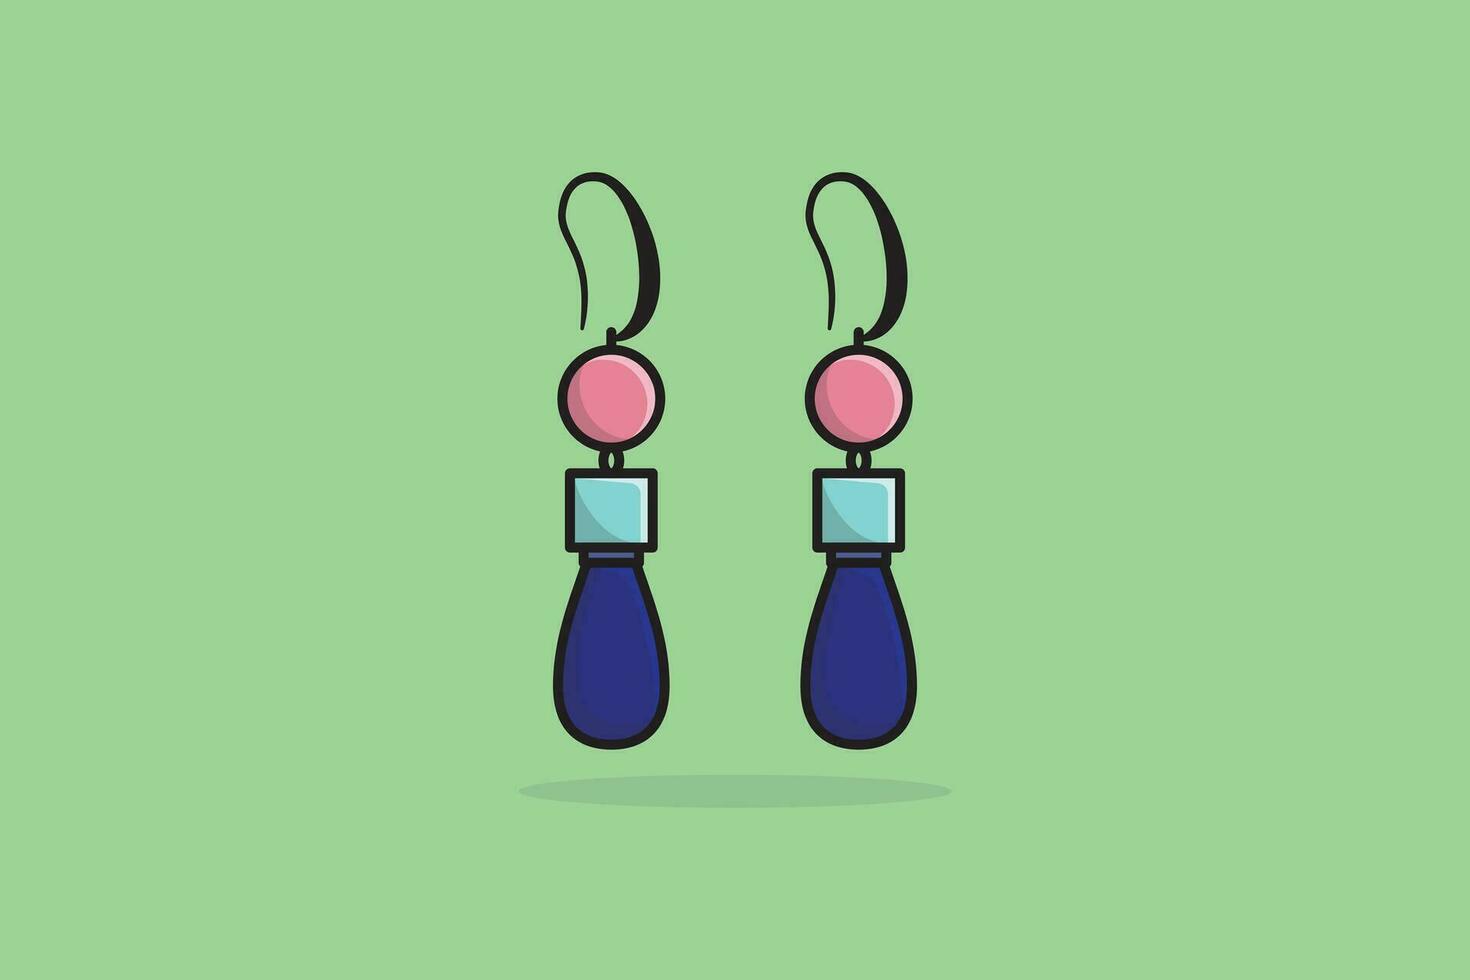 einzigartig Stil Ohrringe zum Frau Vektor Illustration. Schönheit Mode Objekte Symbol Konzept. Frauen stilvoll Schmuck Ohrringe Vektor Design.